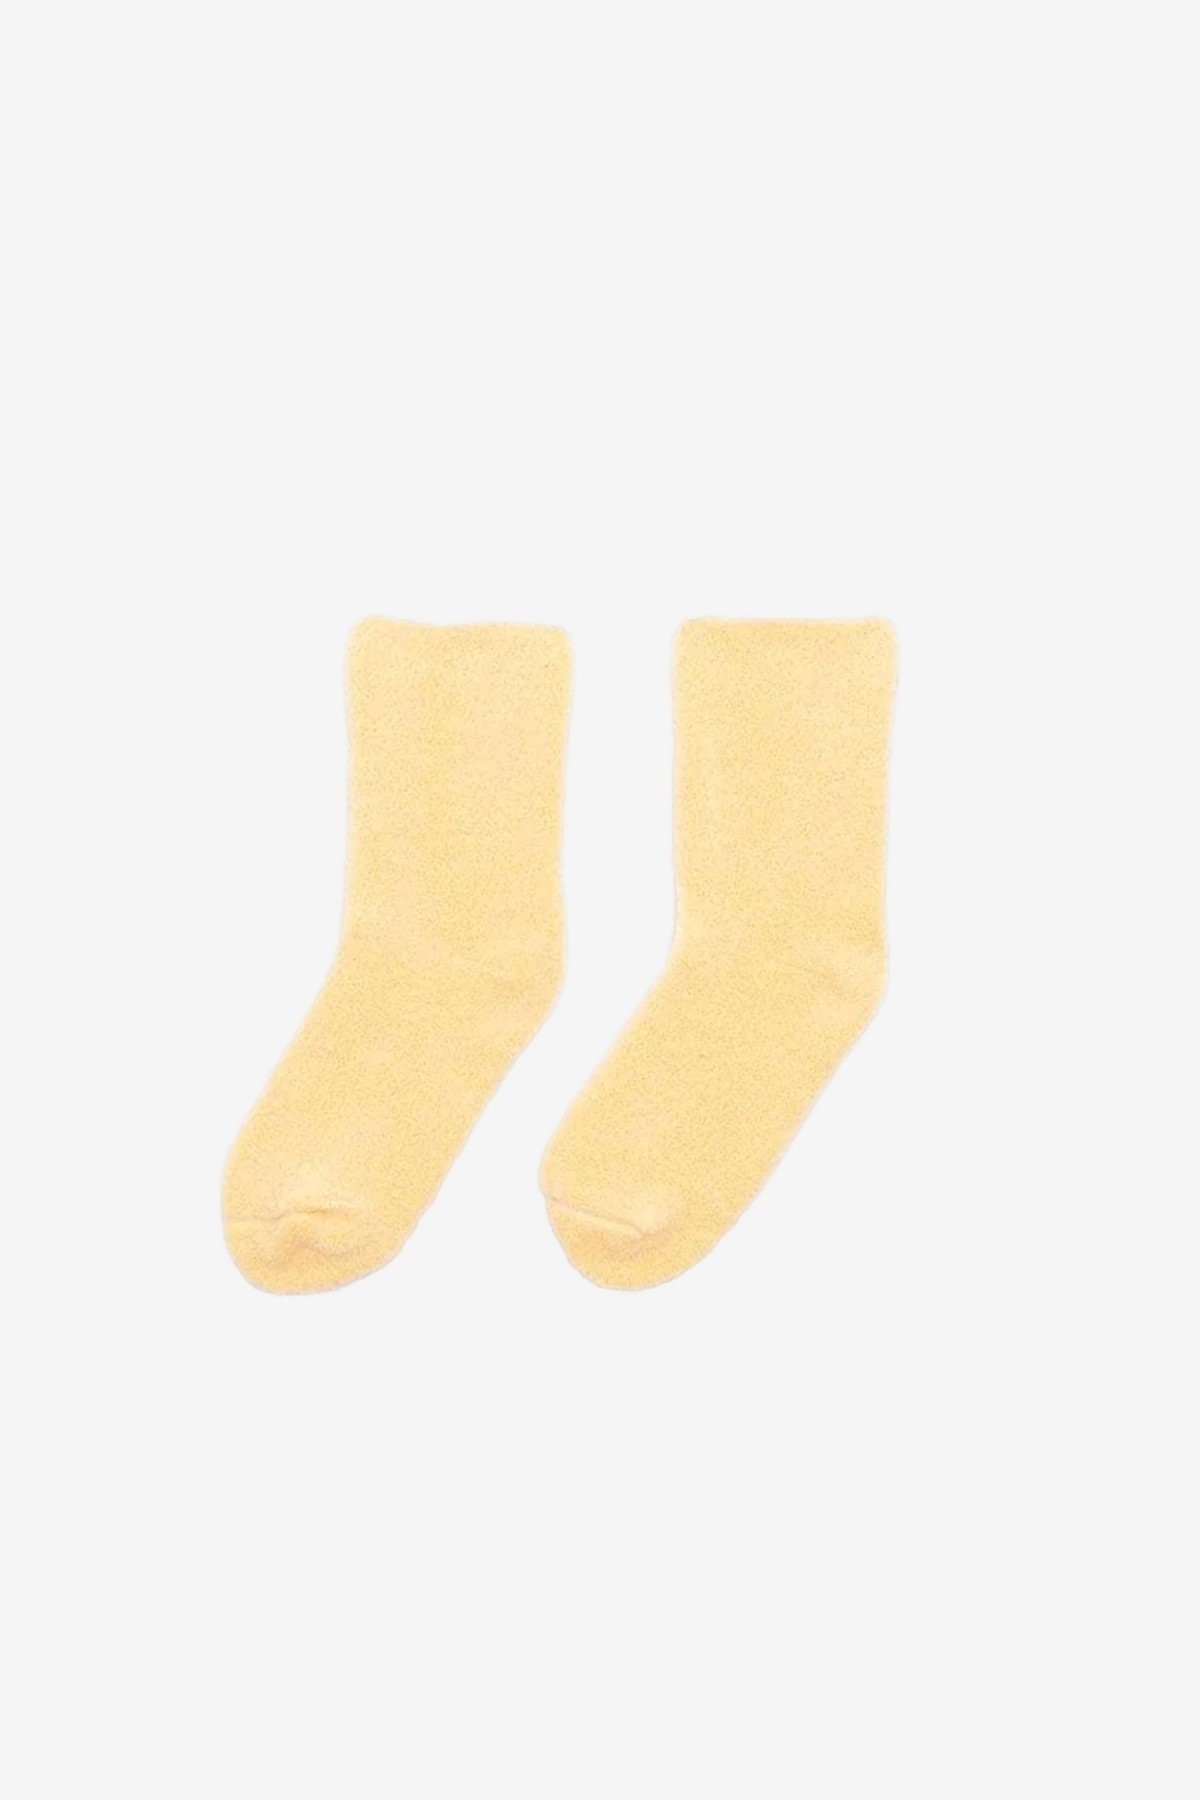 Baserange Buckle Overankle Socks in Mimosa